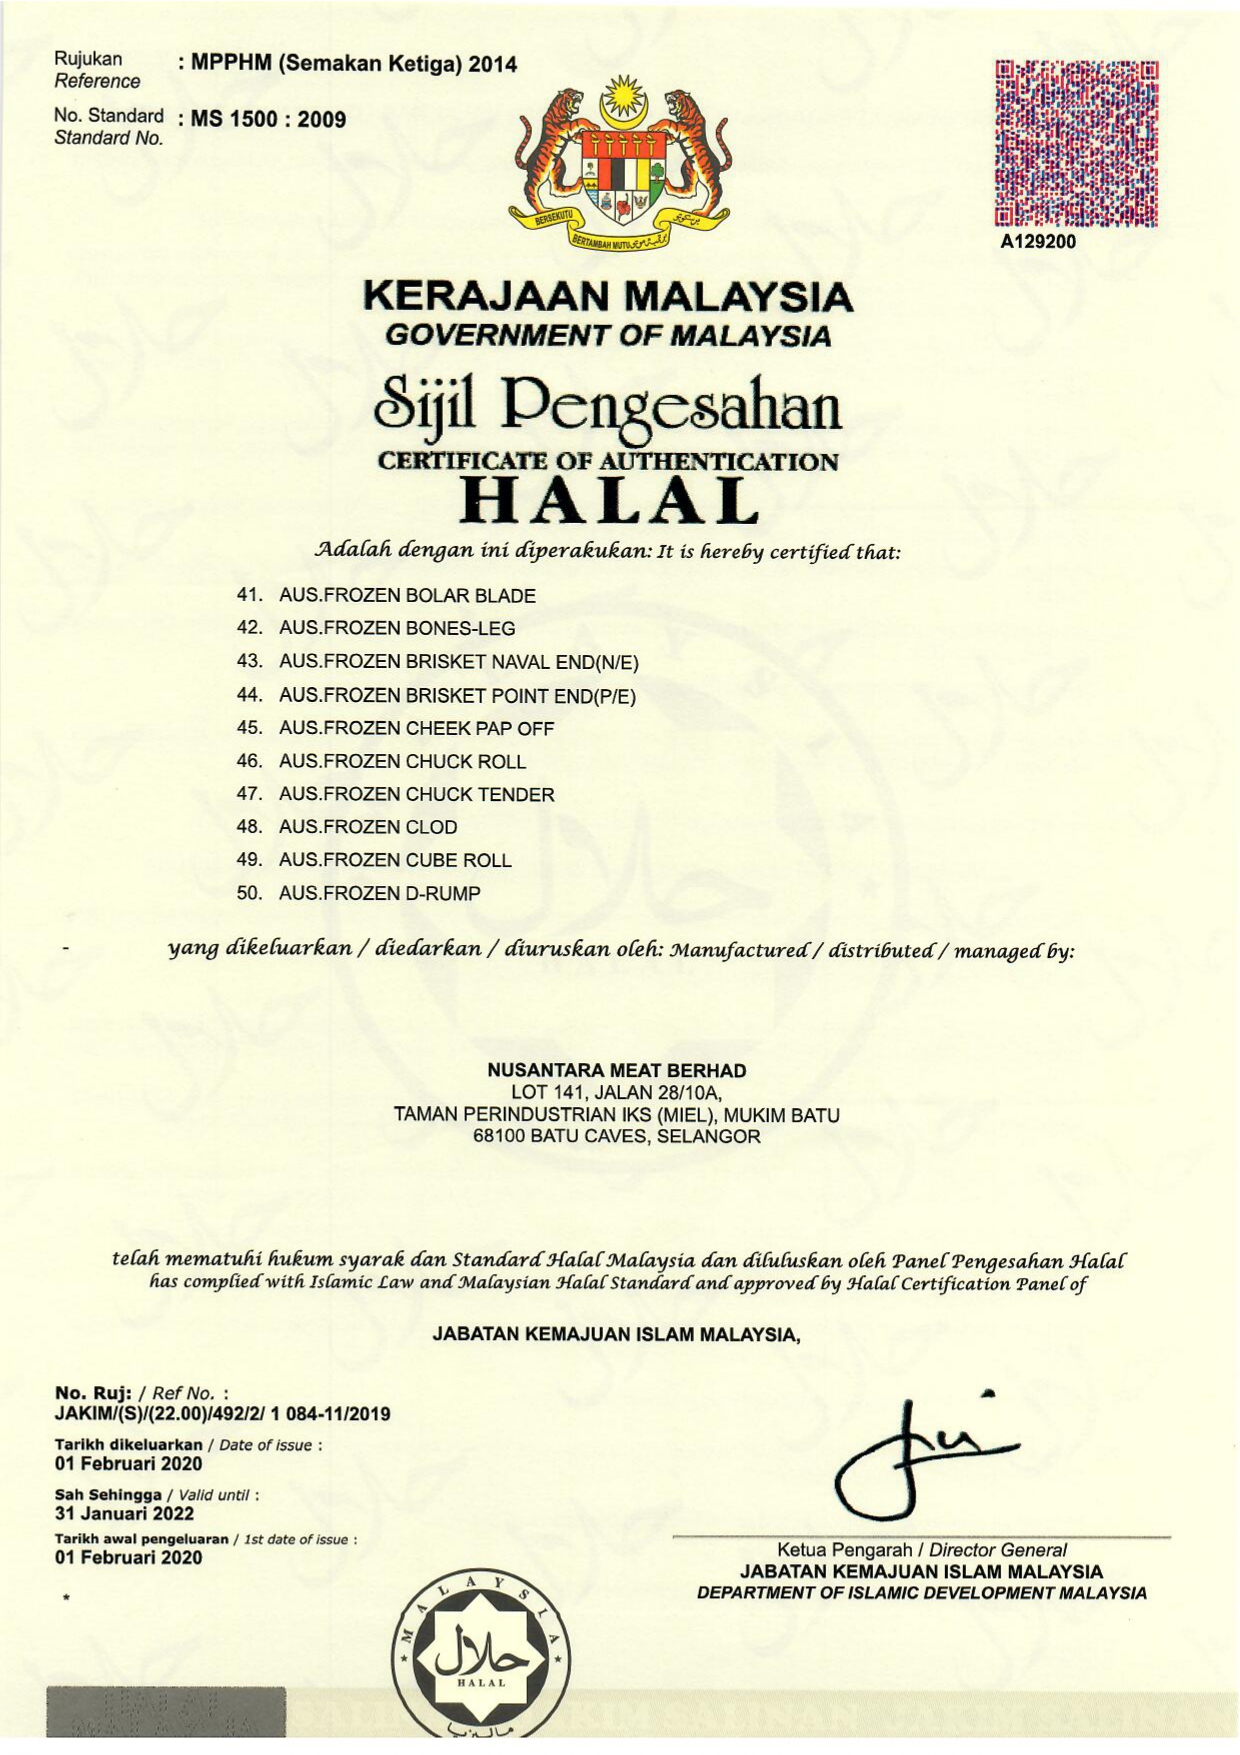 Nusantara Meat Berhad Providing quality clean and consumable halal